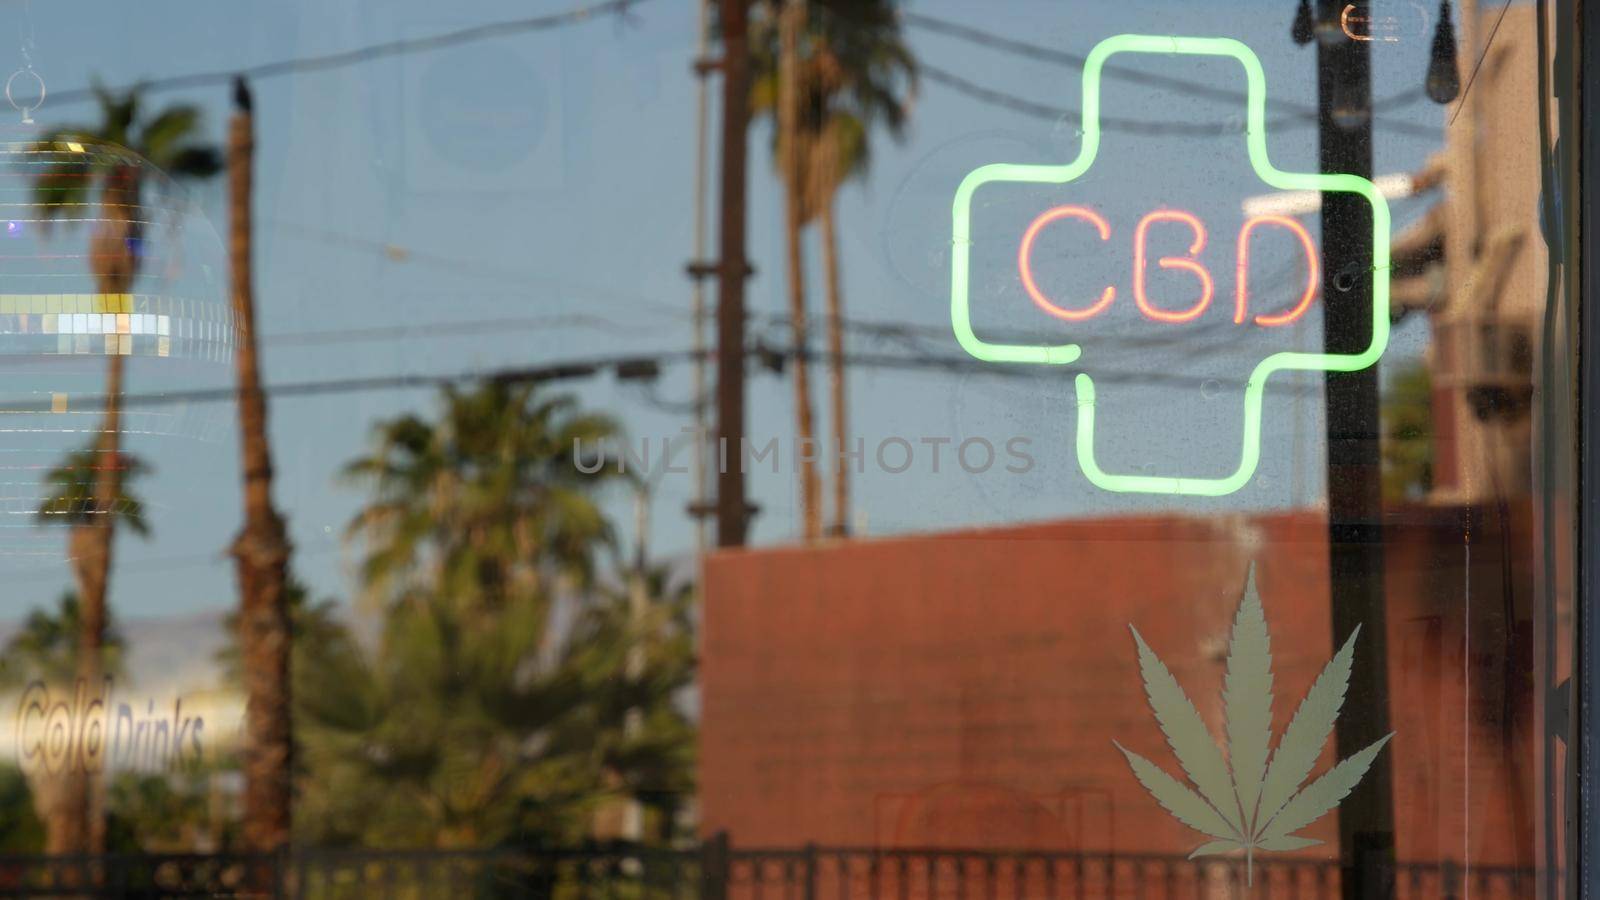 Neon sign in smoke shop, legalized cbd oil or medical cannabis in store, California USA. Legal sale of cannabidiol, weed, hemp, marijuana, ganja or hashish in dispensary. Cannabinoids in drugstore.